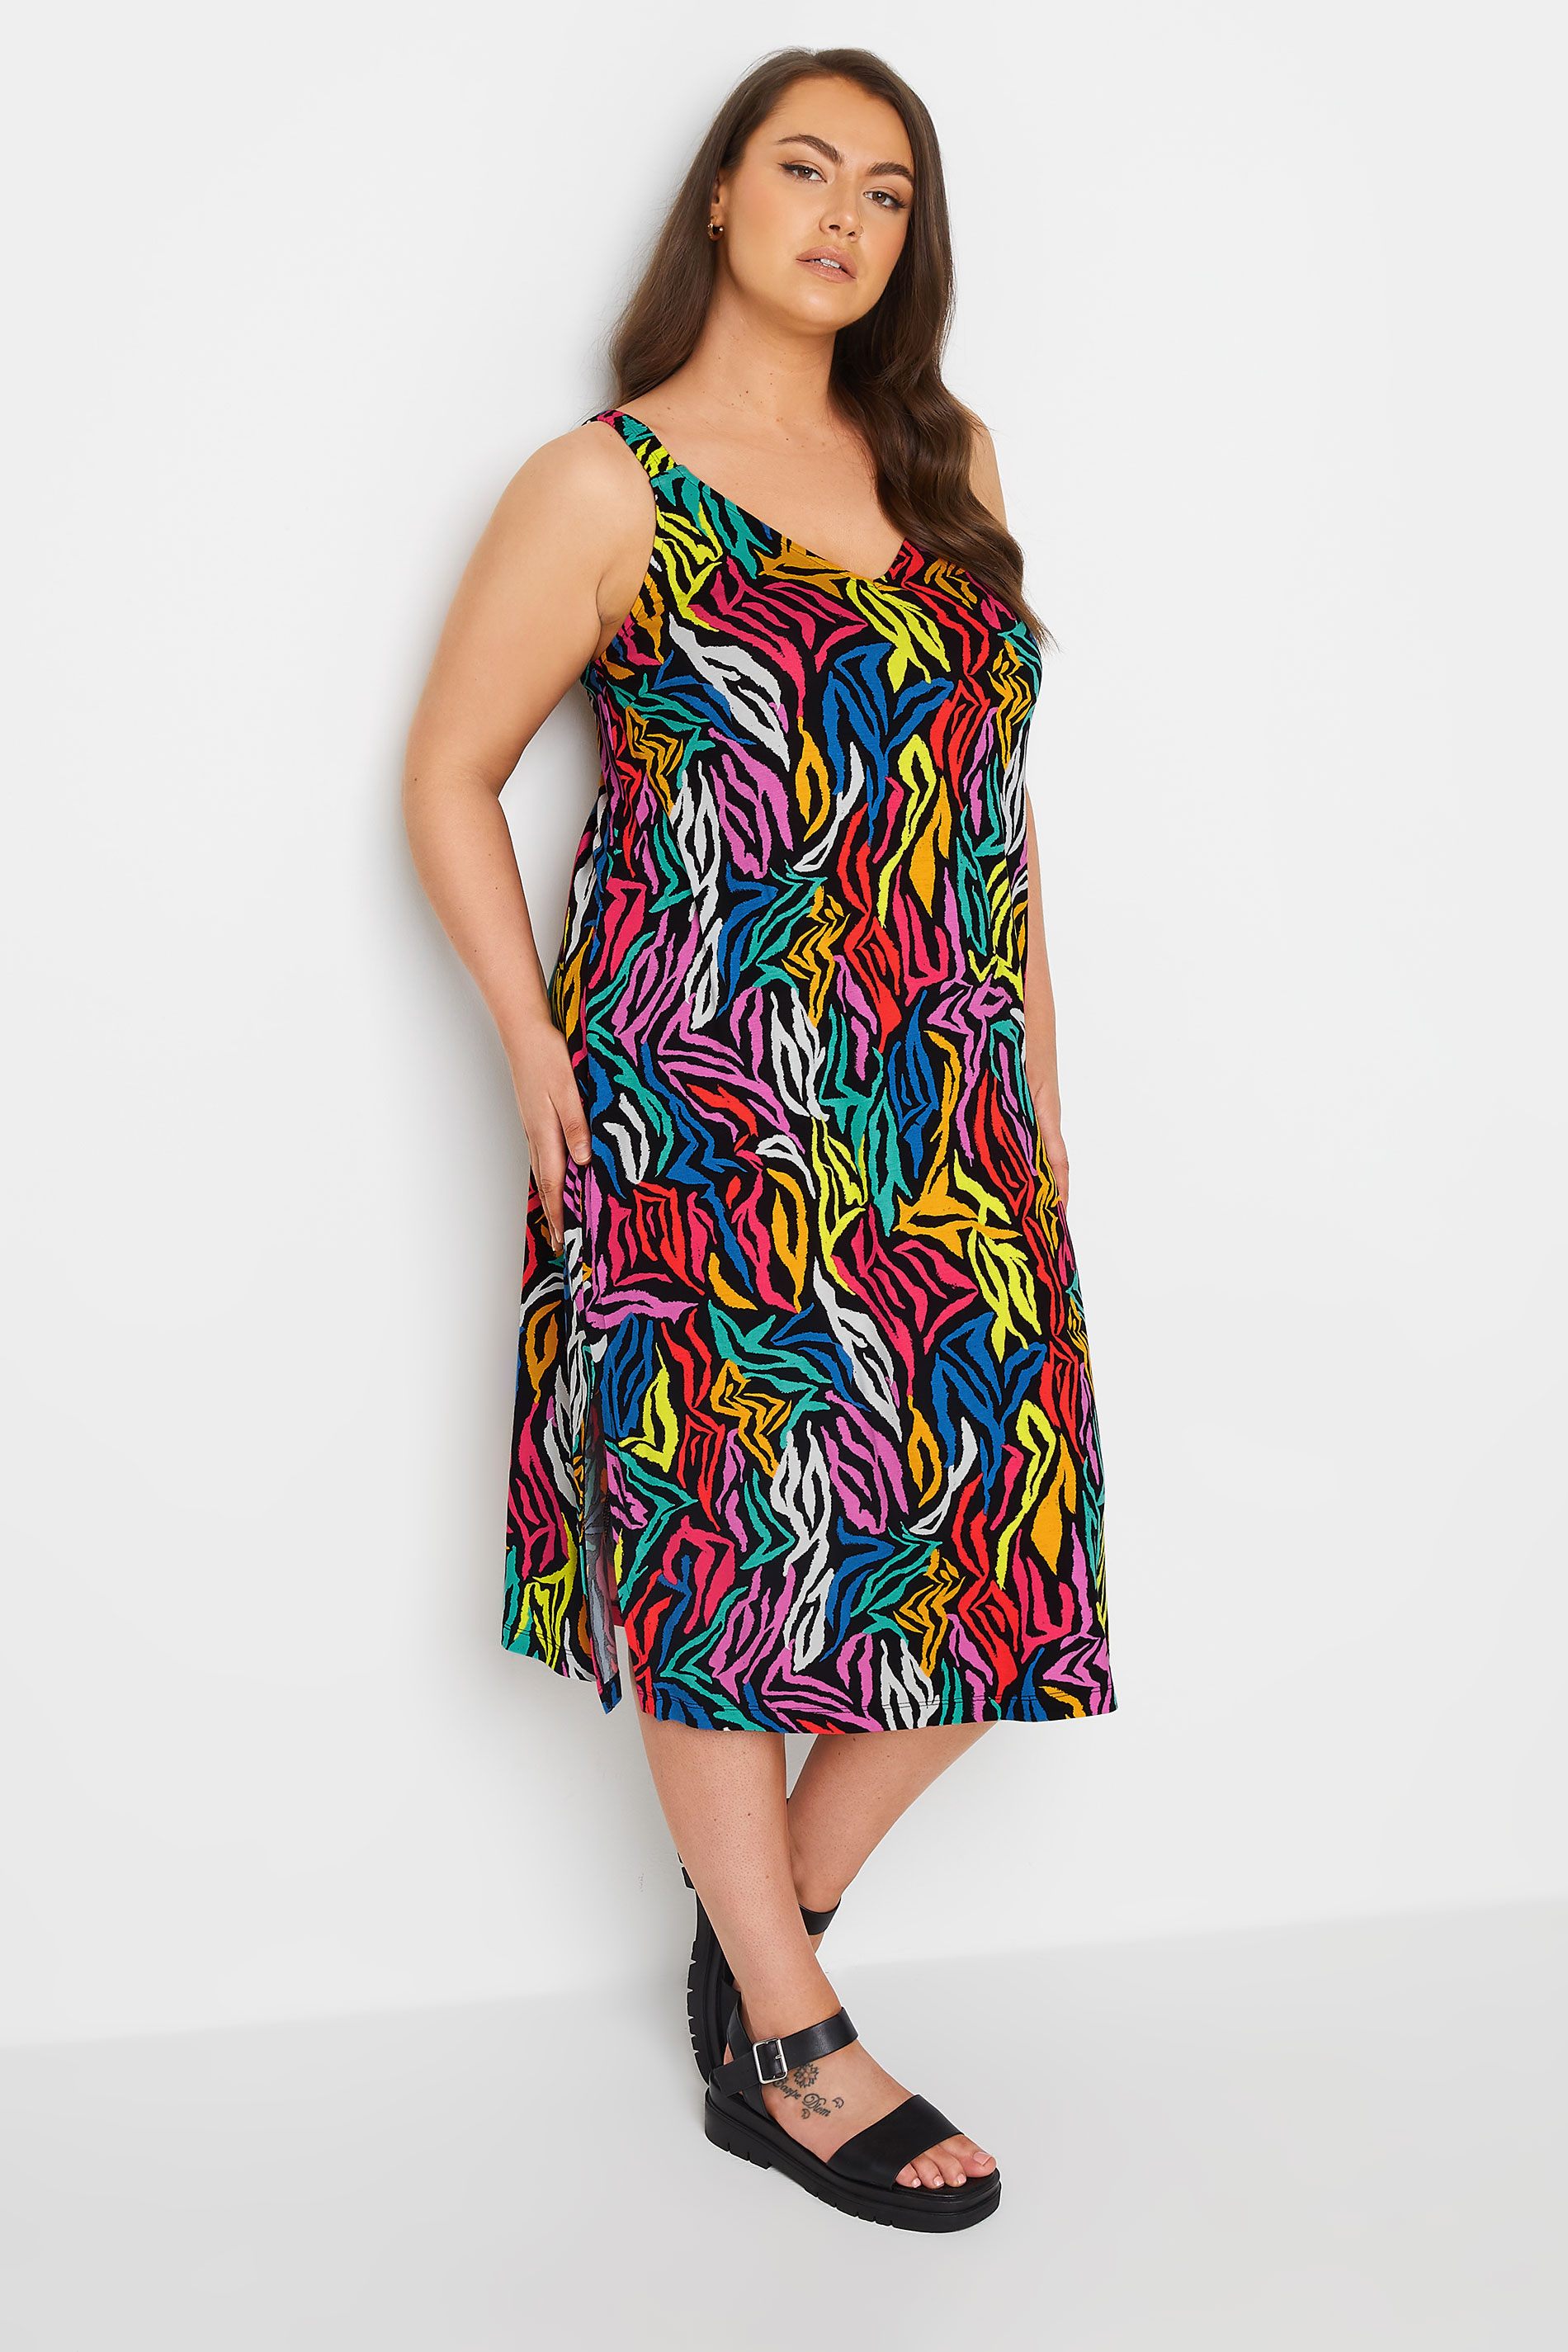 YOURS Plus Size Black Rainbow Zebra Print Beach Dress | Yours Clothing 2